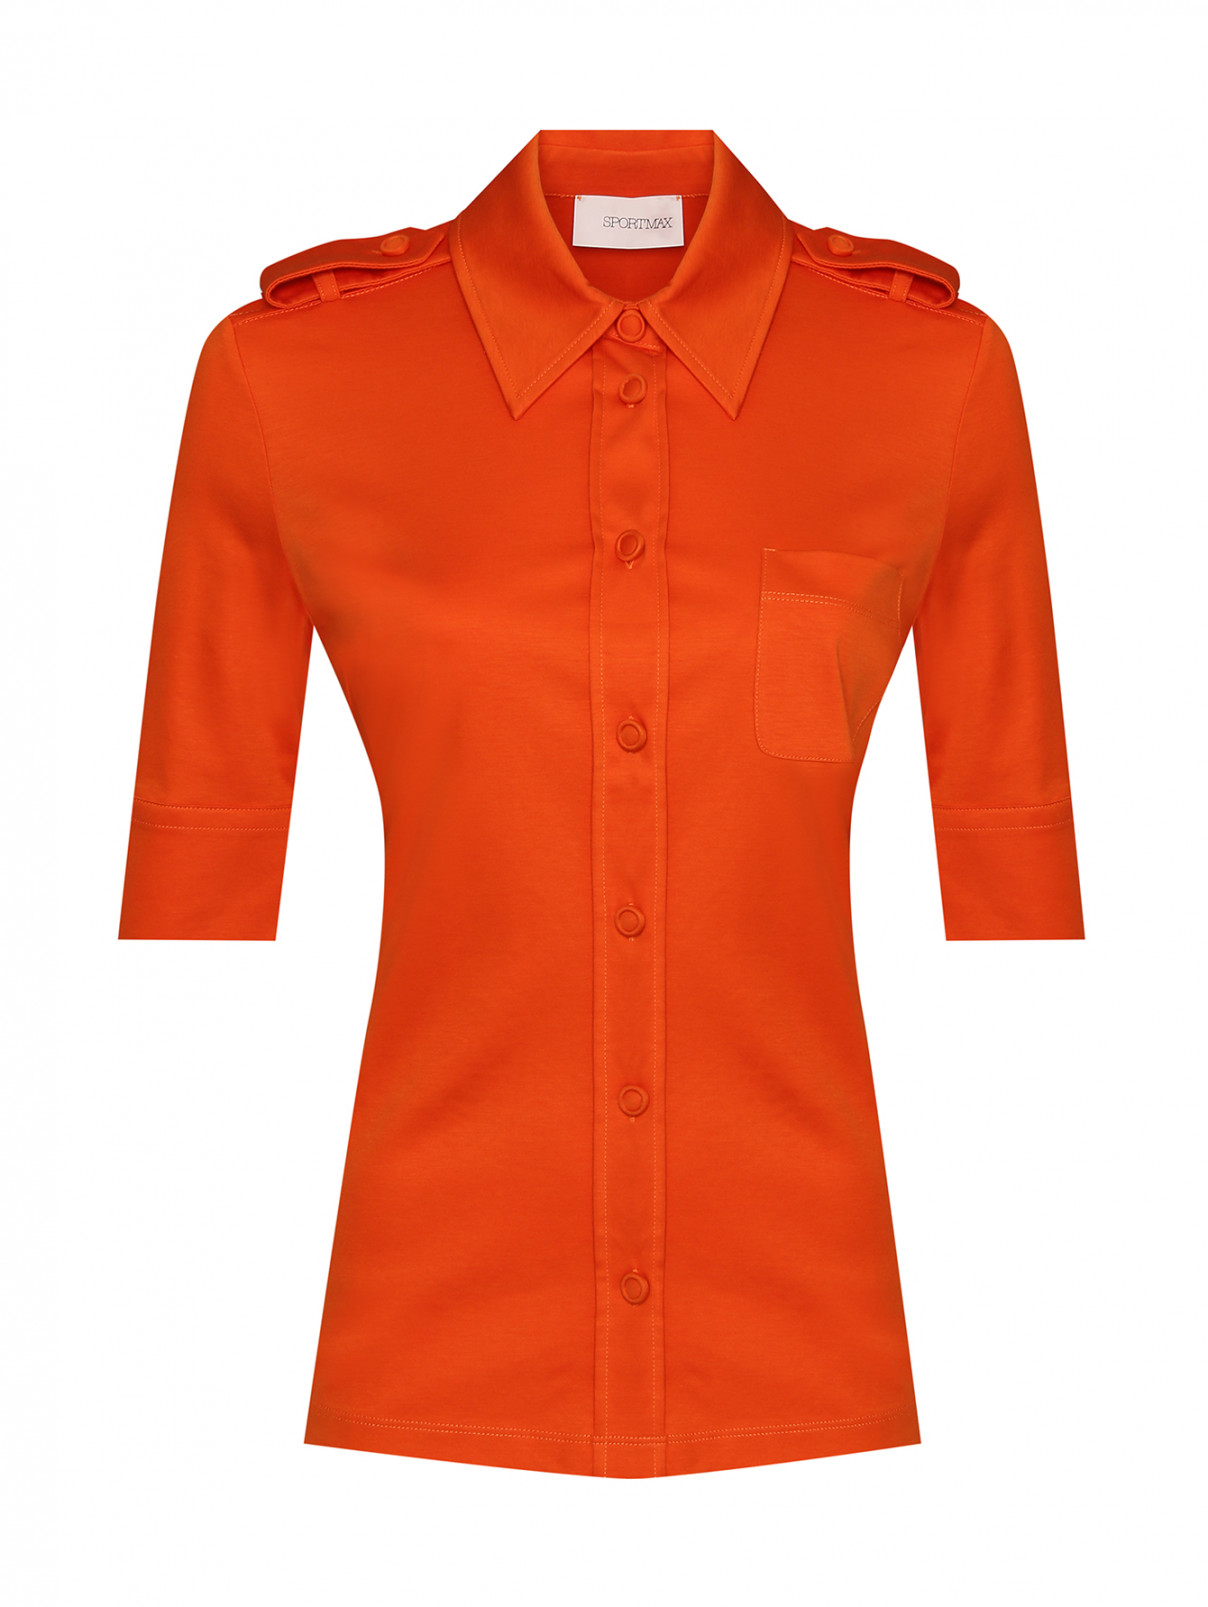 Рубашка с коротким рукавом на пуговицах Sportmax  –  Общий вид  – Цвет:  Оранжевый